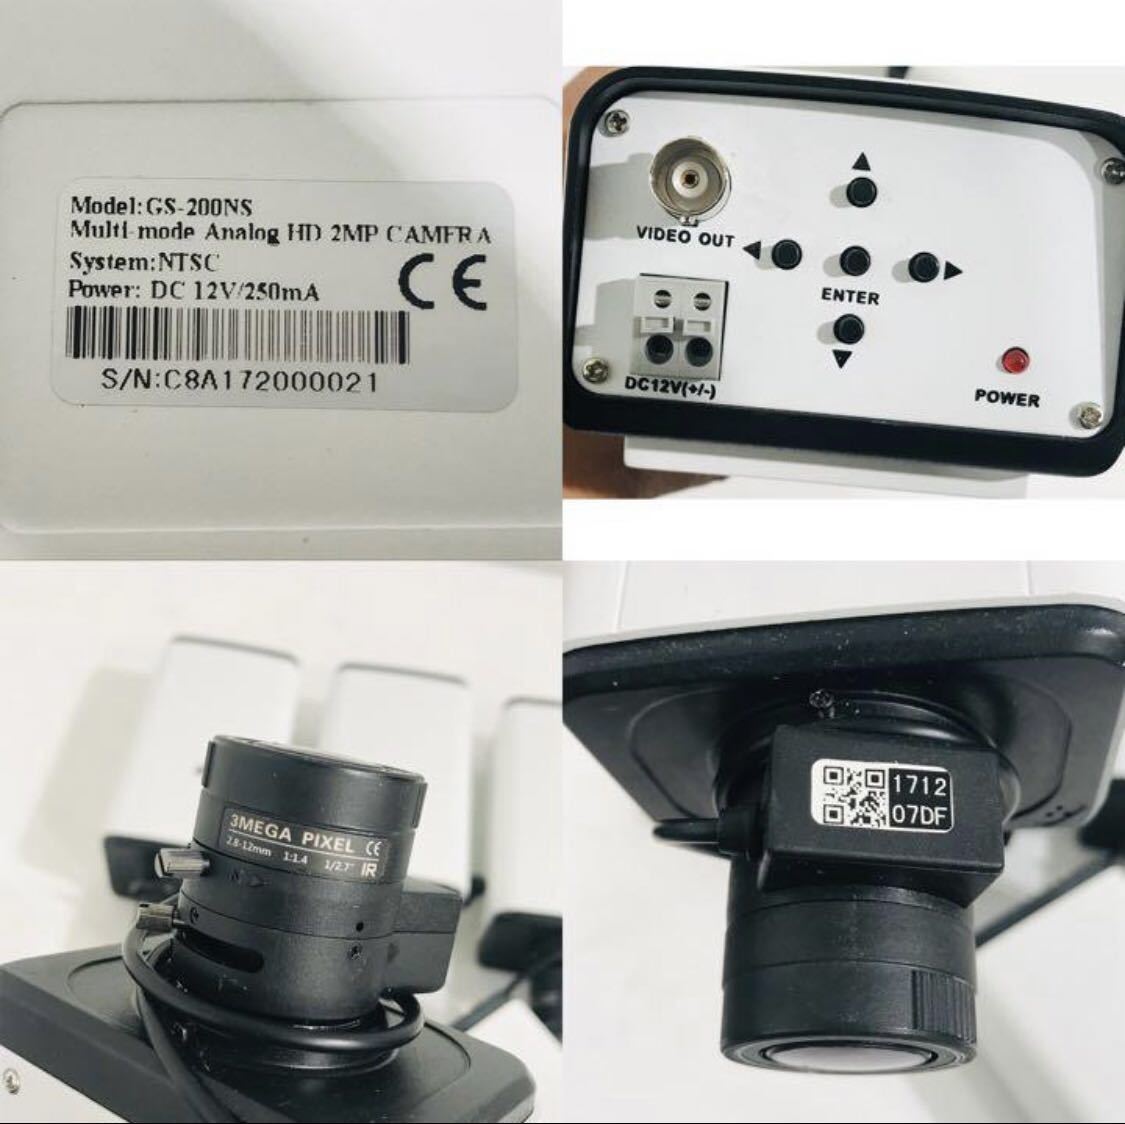 HD防犯カメラ Multi-Mode Analog HD 2MP Camera 5本 パワー2個 レコーダーセット5個 スタンド付き GS-200NS cctv camera セキュリティ_画像4